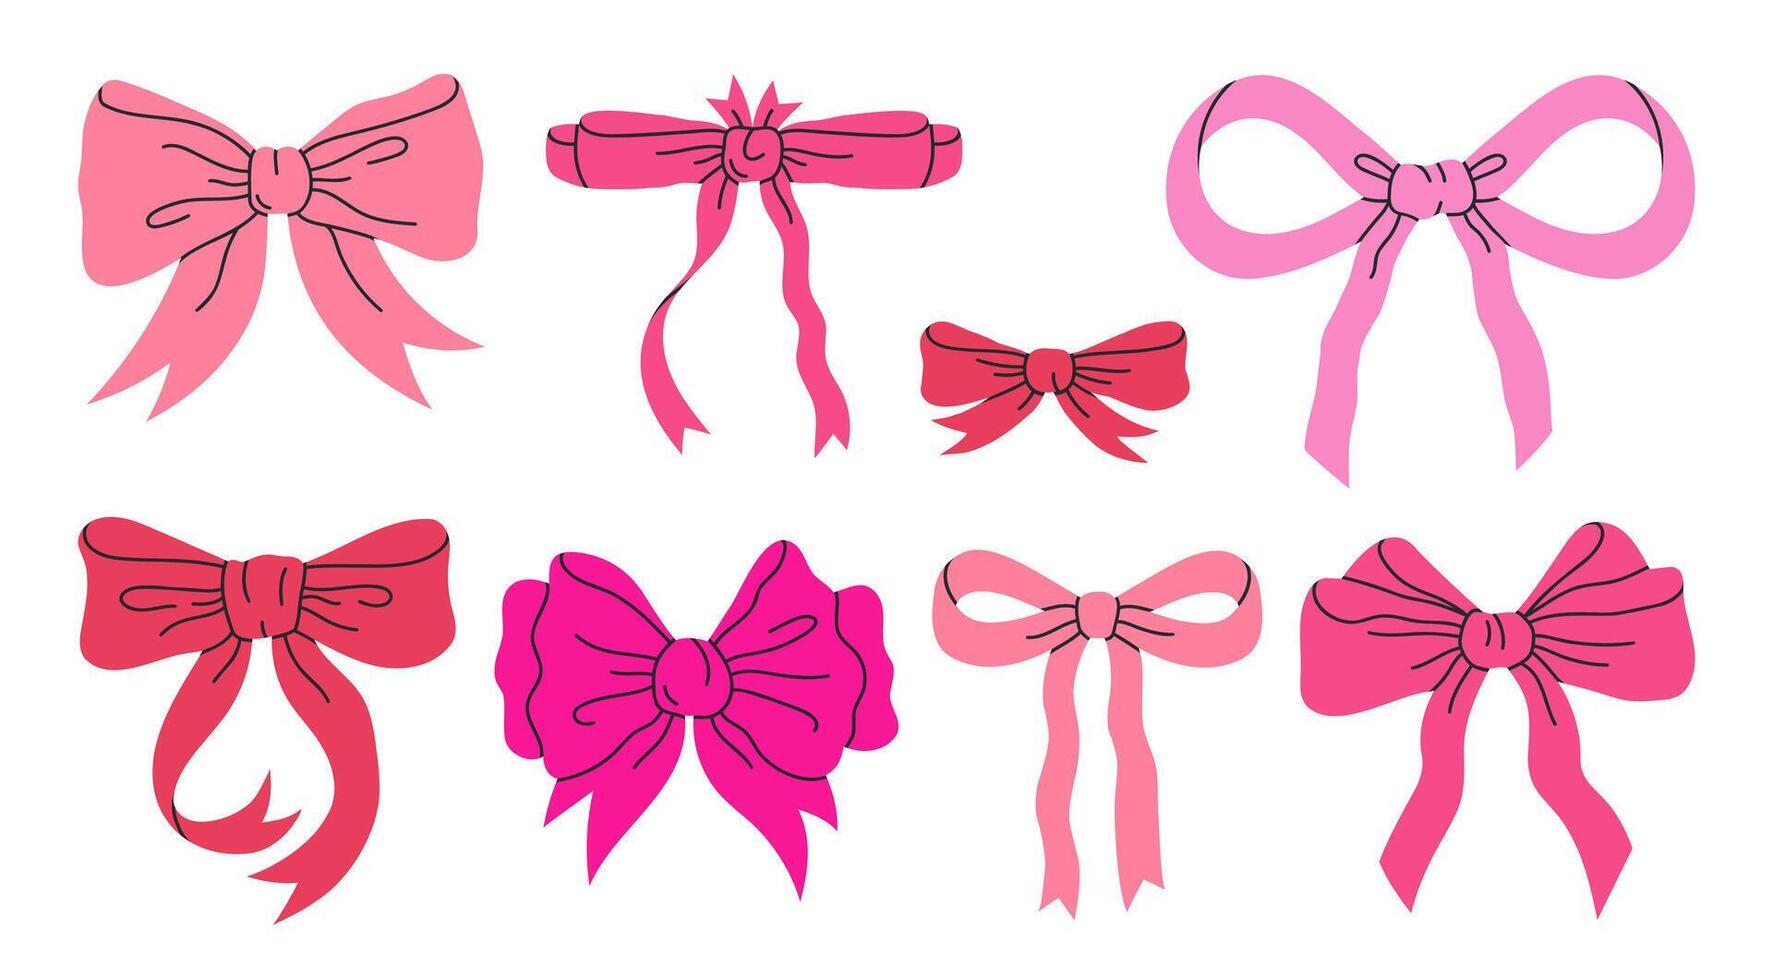 Hand drawn silk bows. Birthday party gifts red ribbon decoration, holidays present box decor flat vector illustration set. Cartoon pink bows on white